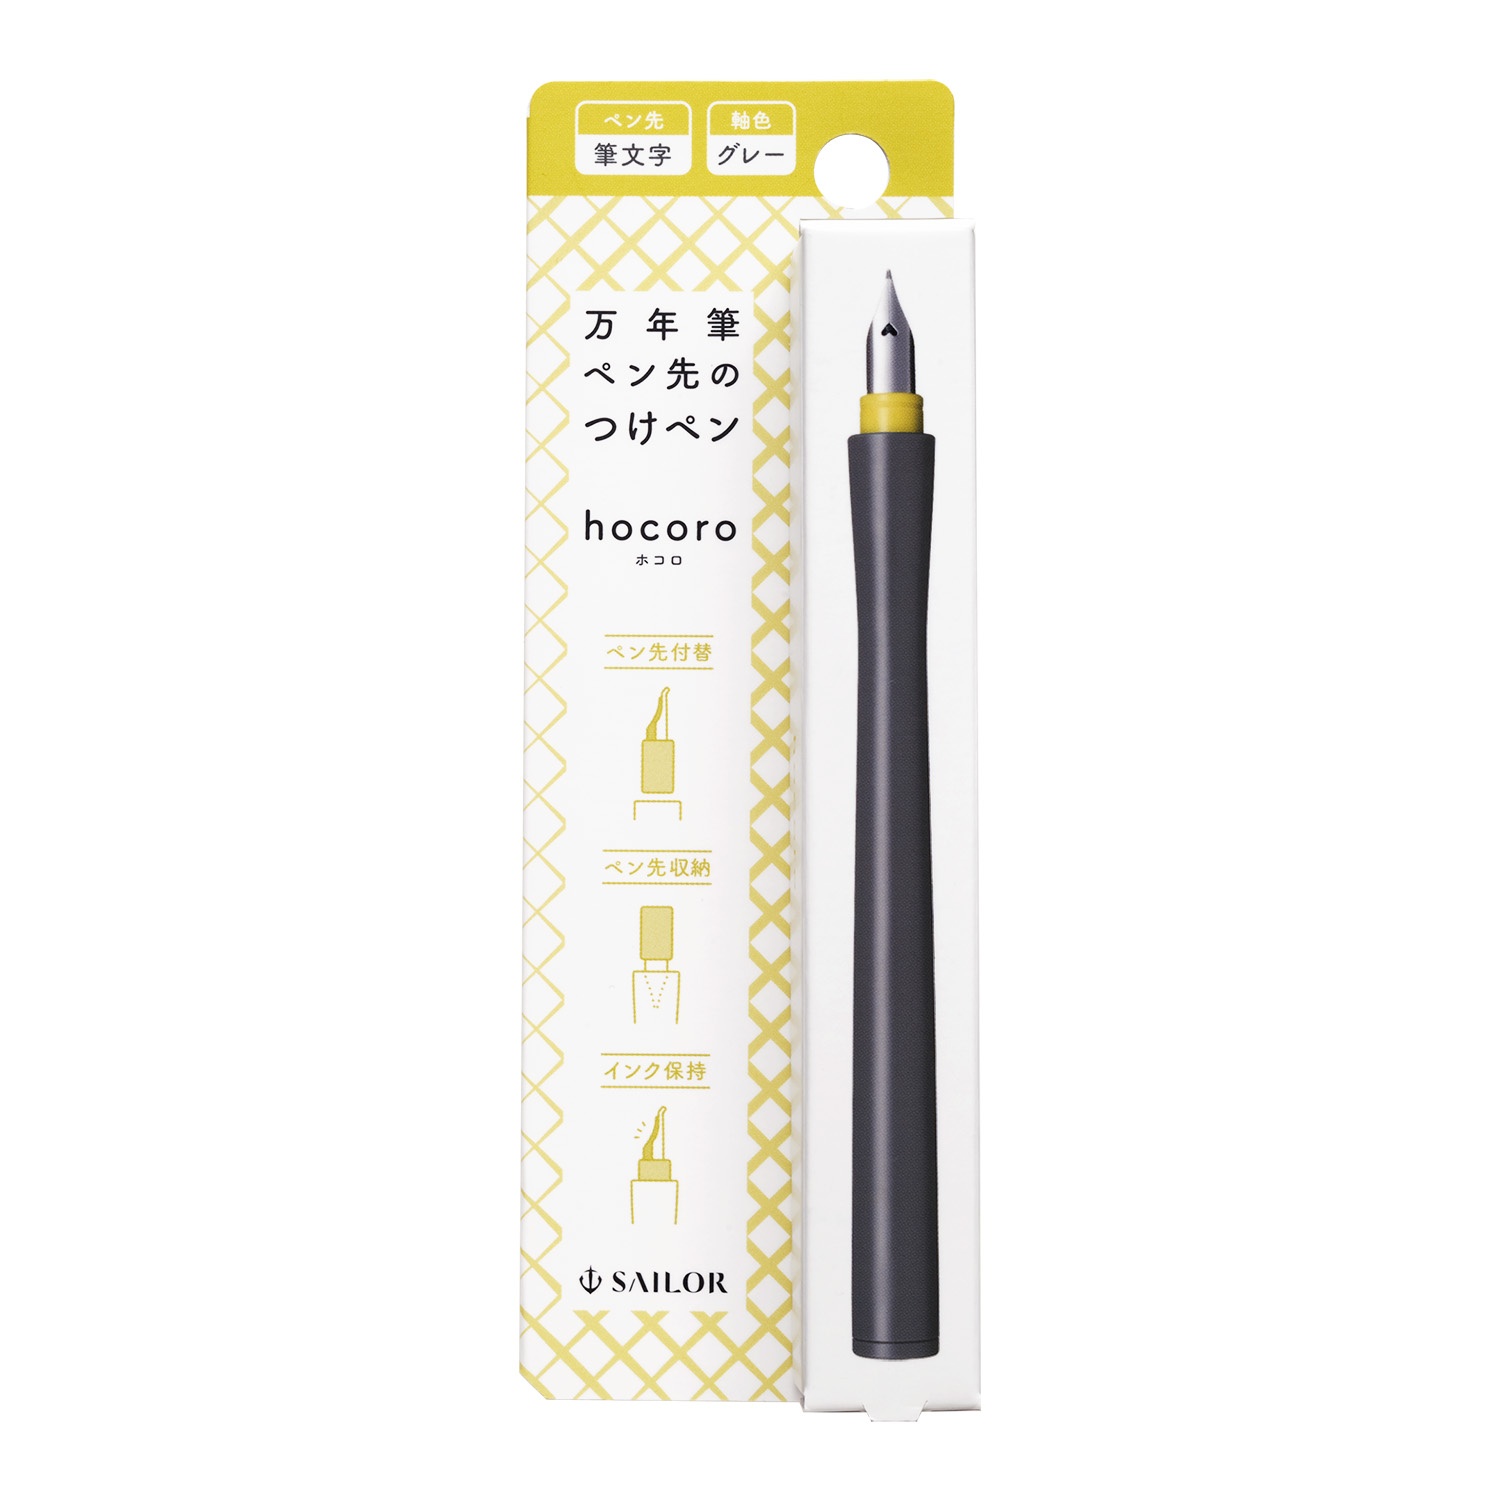 Sailor Hocoro Dip Pen